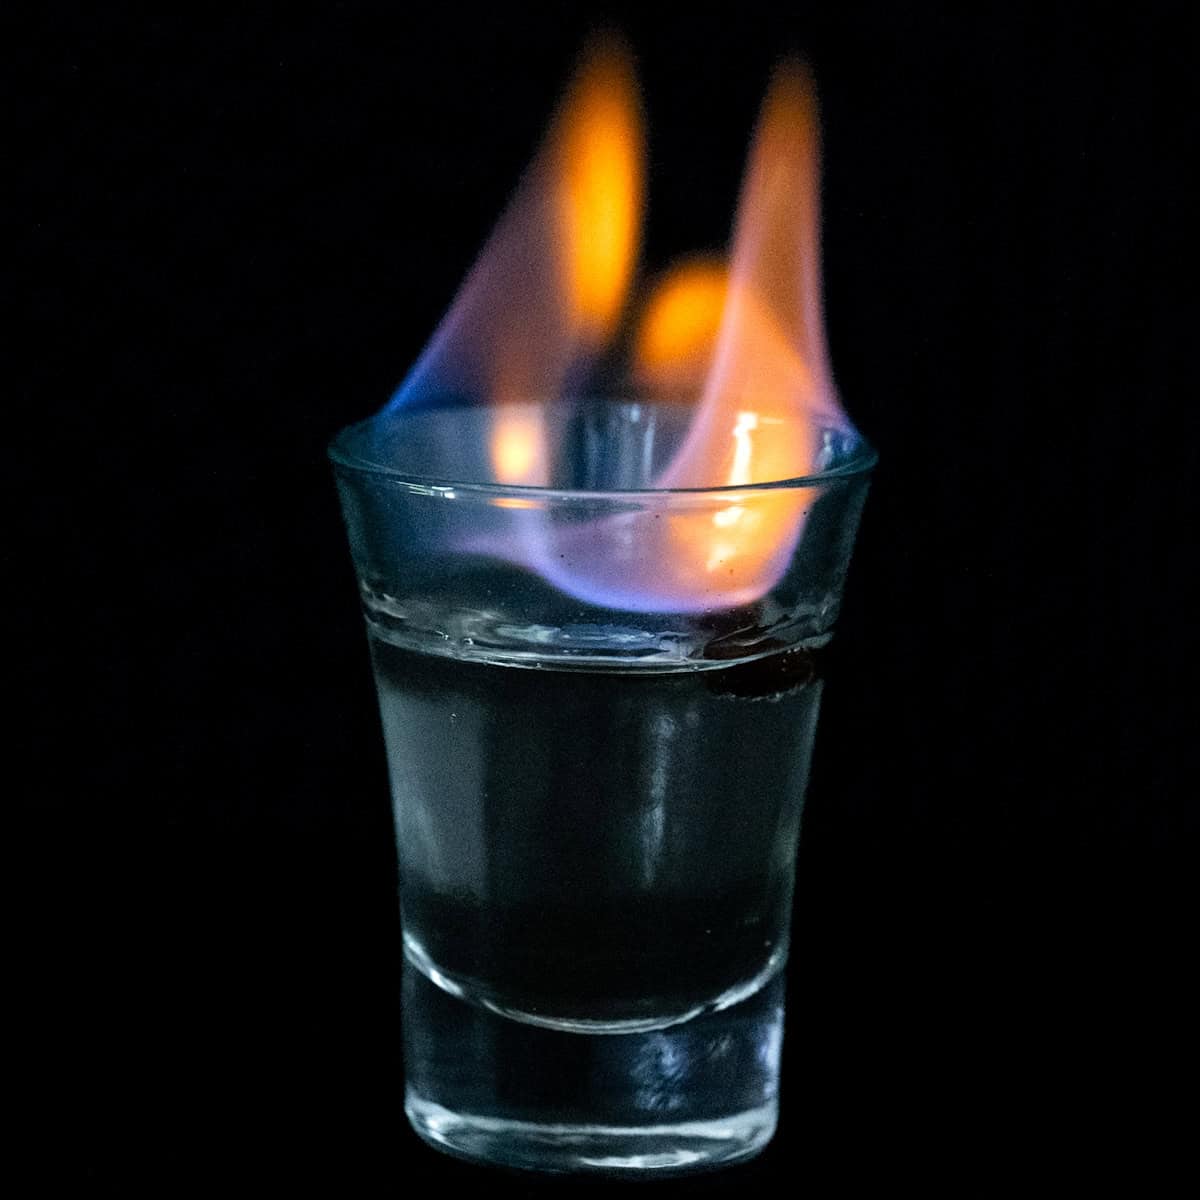 A sambuca shot on fire with an orange blue flame. 